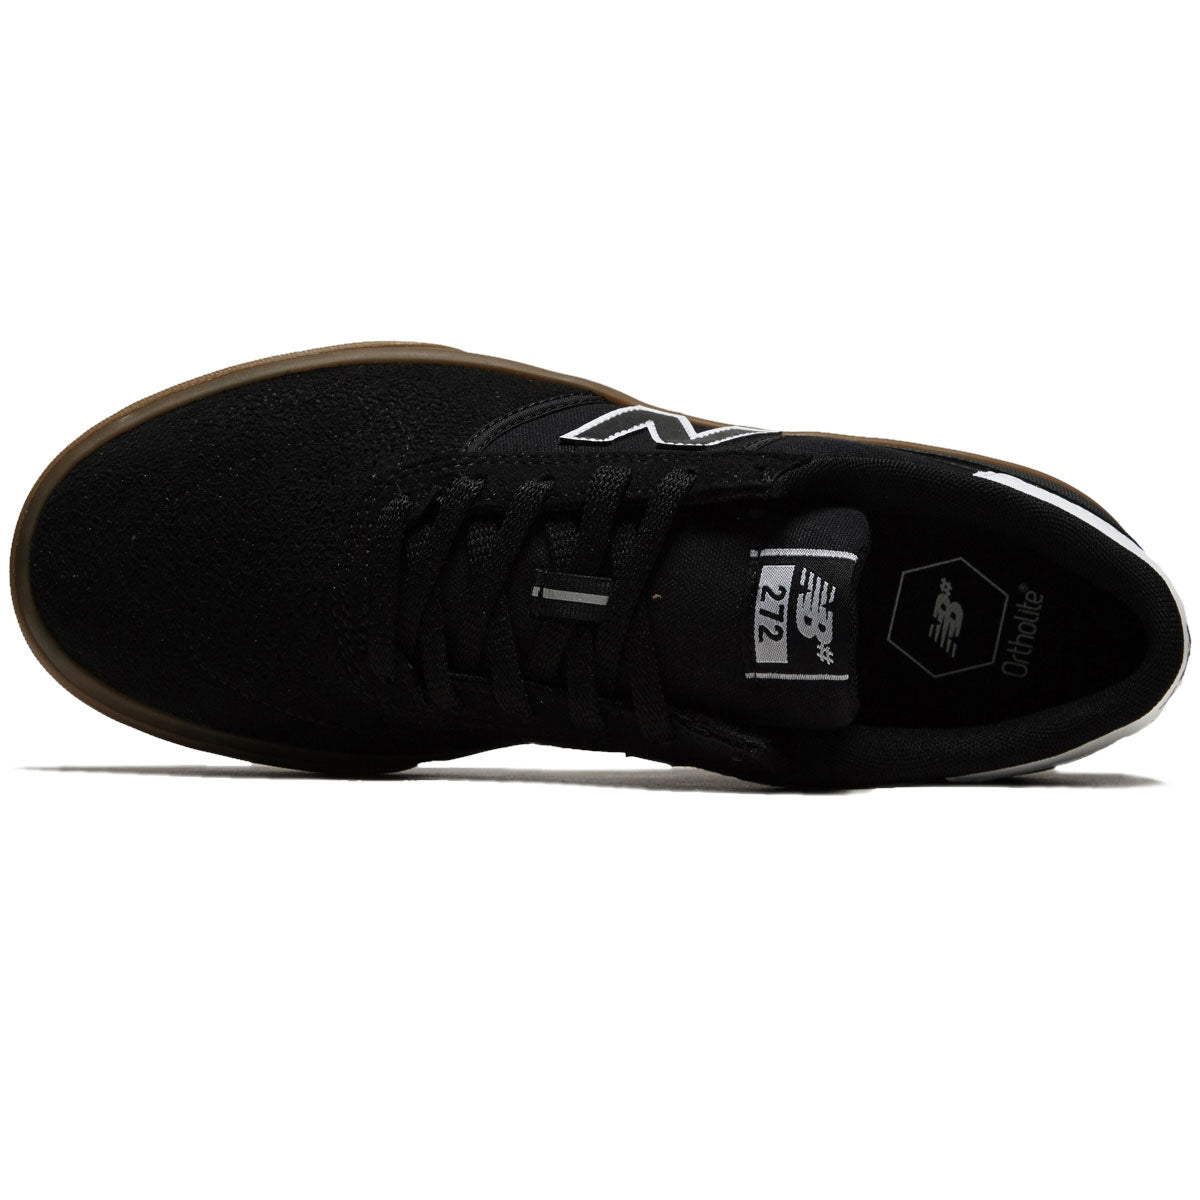 New Balance 272 Shoes - Black/Gum Vegan image 3